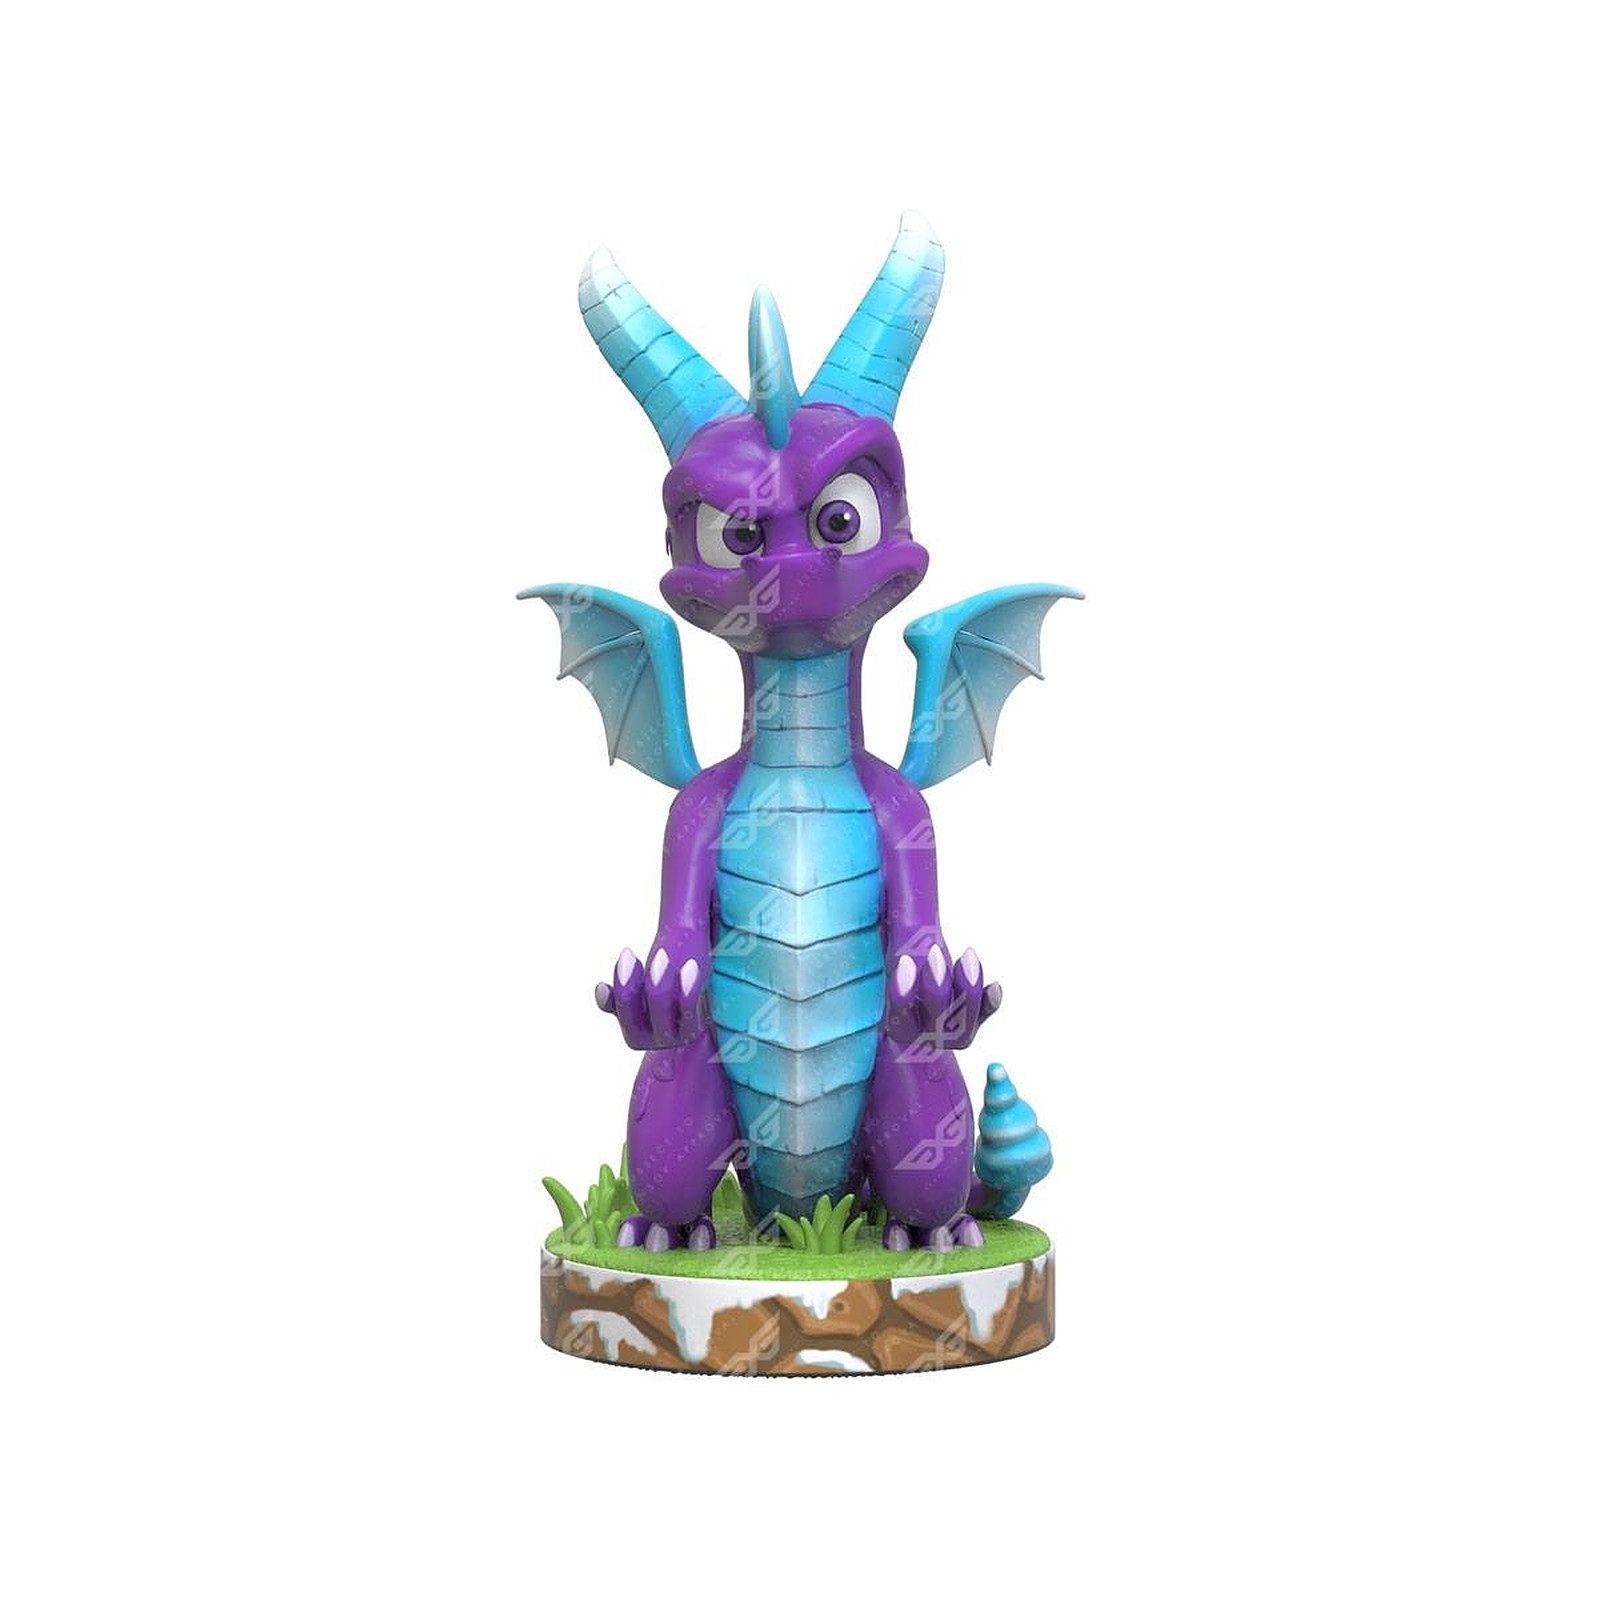 Spyro the Dragon - Figurine Cable Guy Ice Spyro 20 cm - Figurines Exquisite Gaming